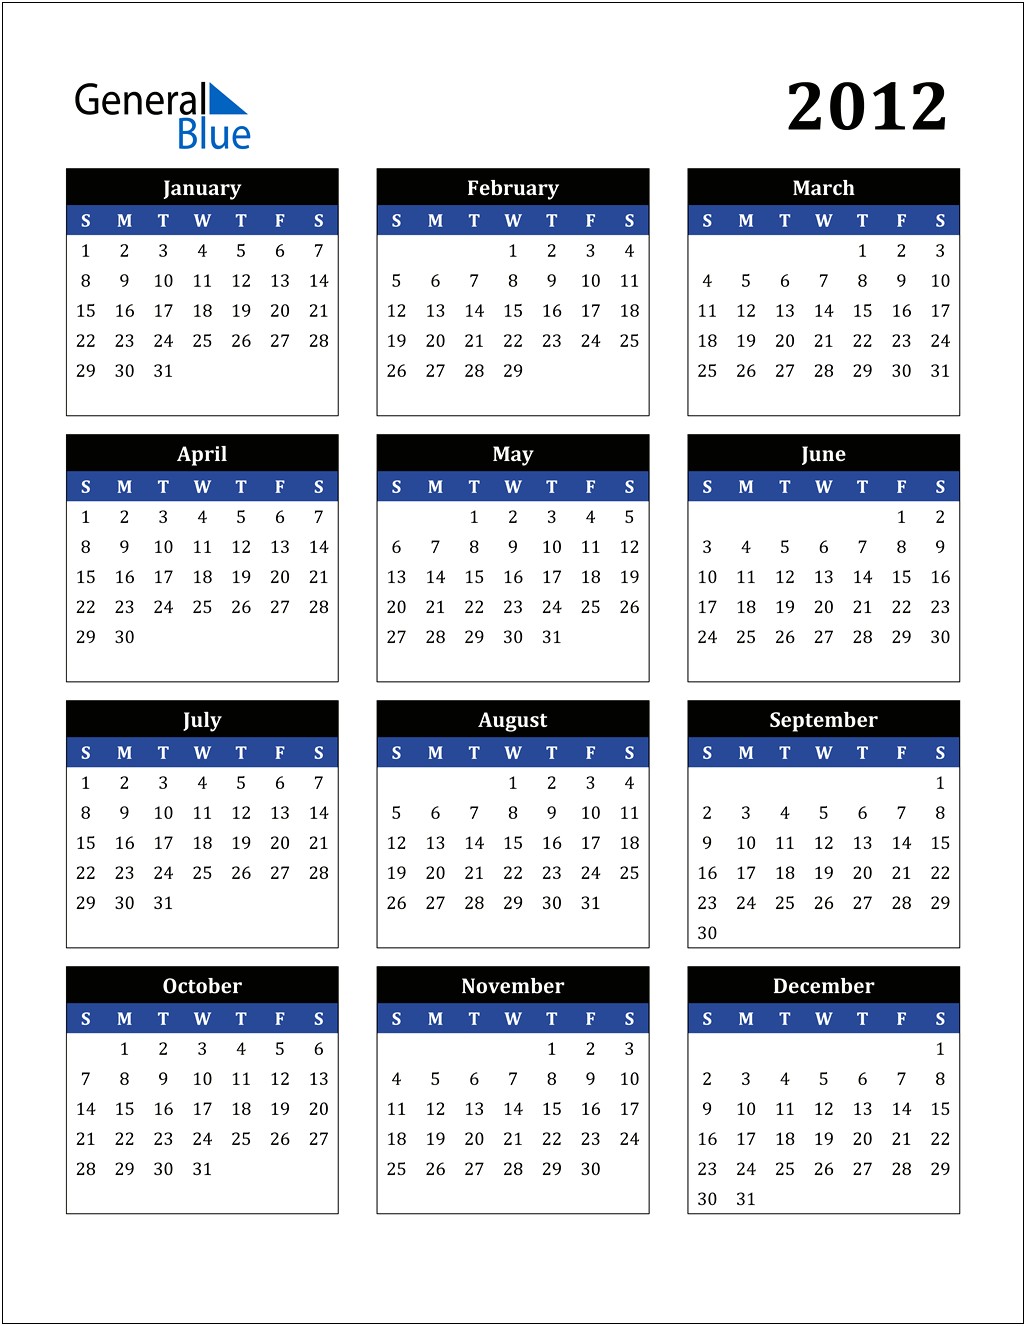 October 2012 Calendar Template Microsoft Word